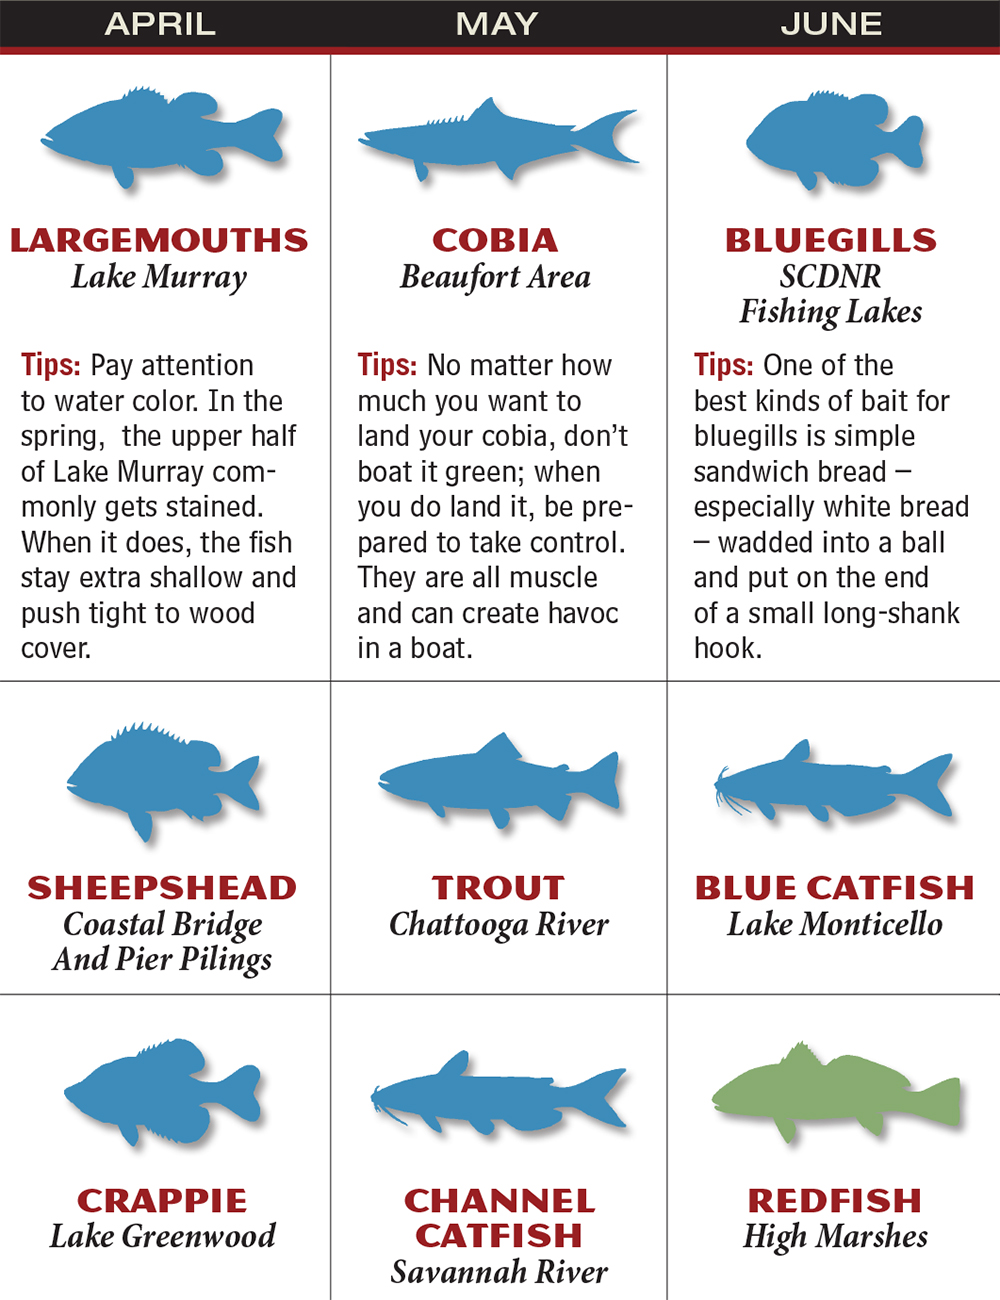 South Carolina 2016 Fishing Calendar Game & Fish